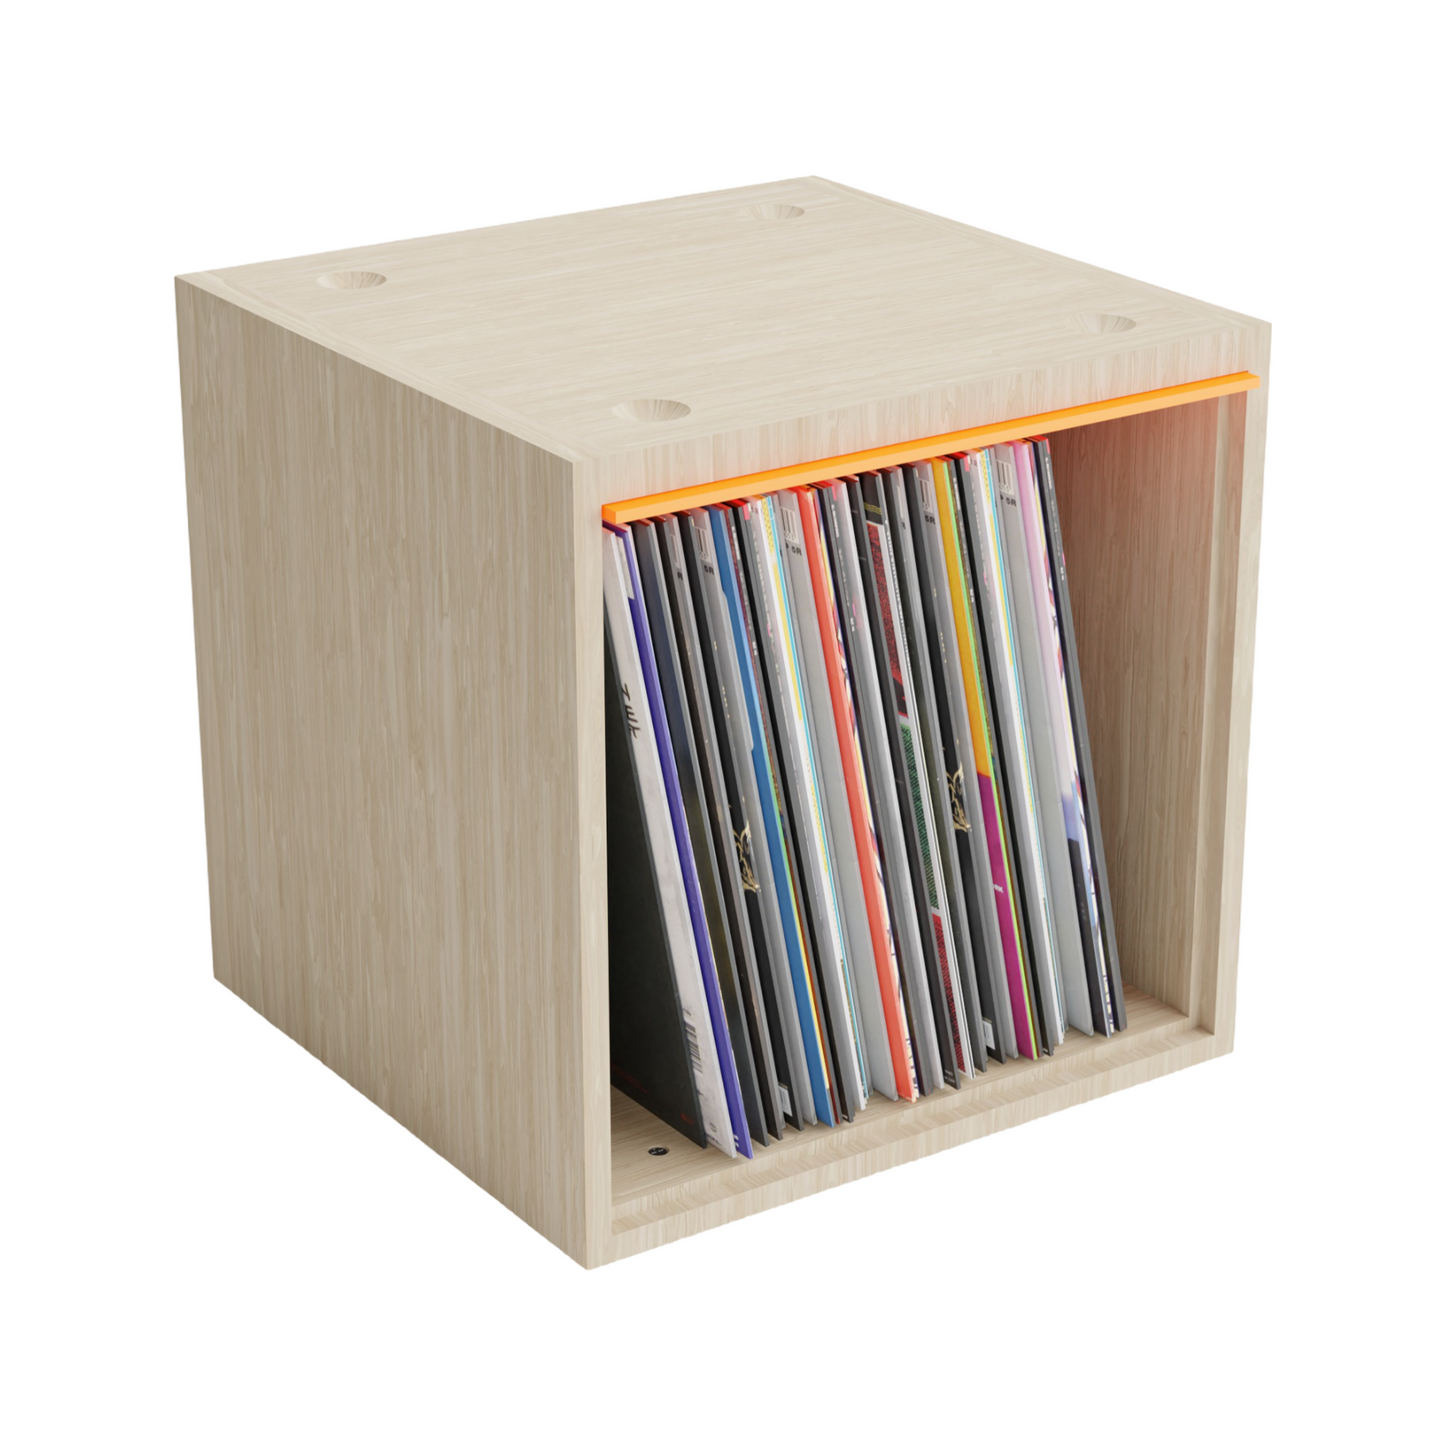 Vinyl Record Box STAX I - Holds up to 50 Albums, Record Box - V-BOX STAX -